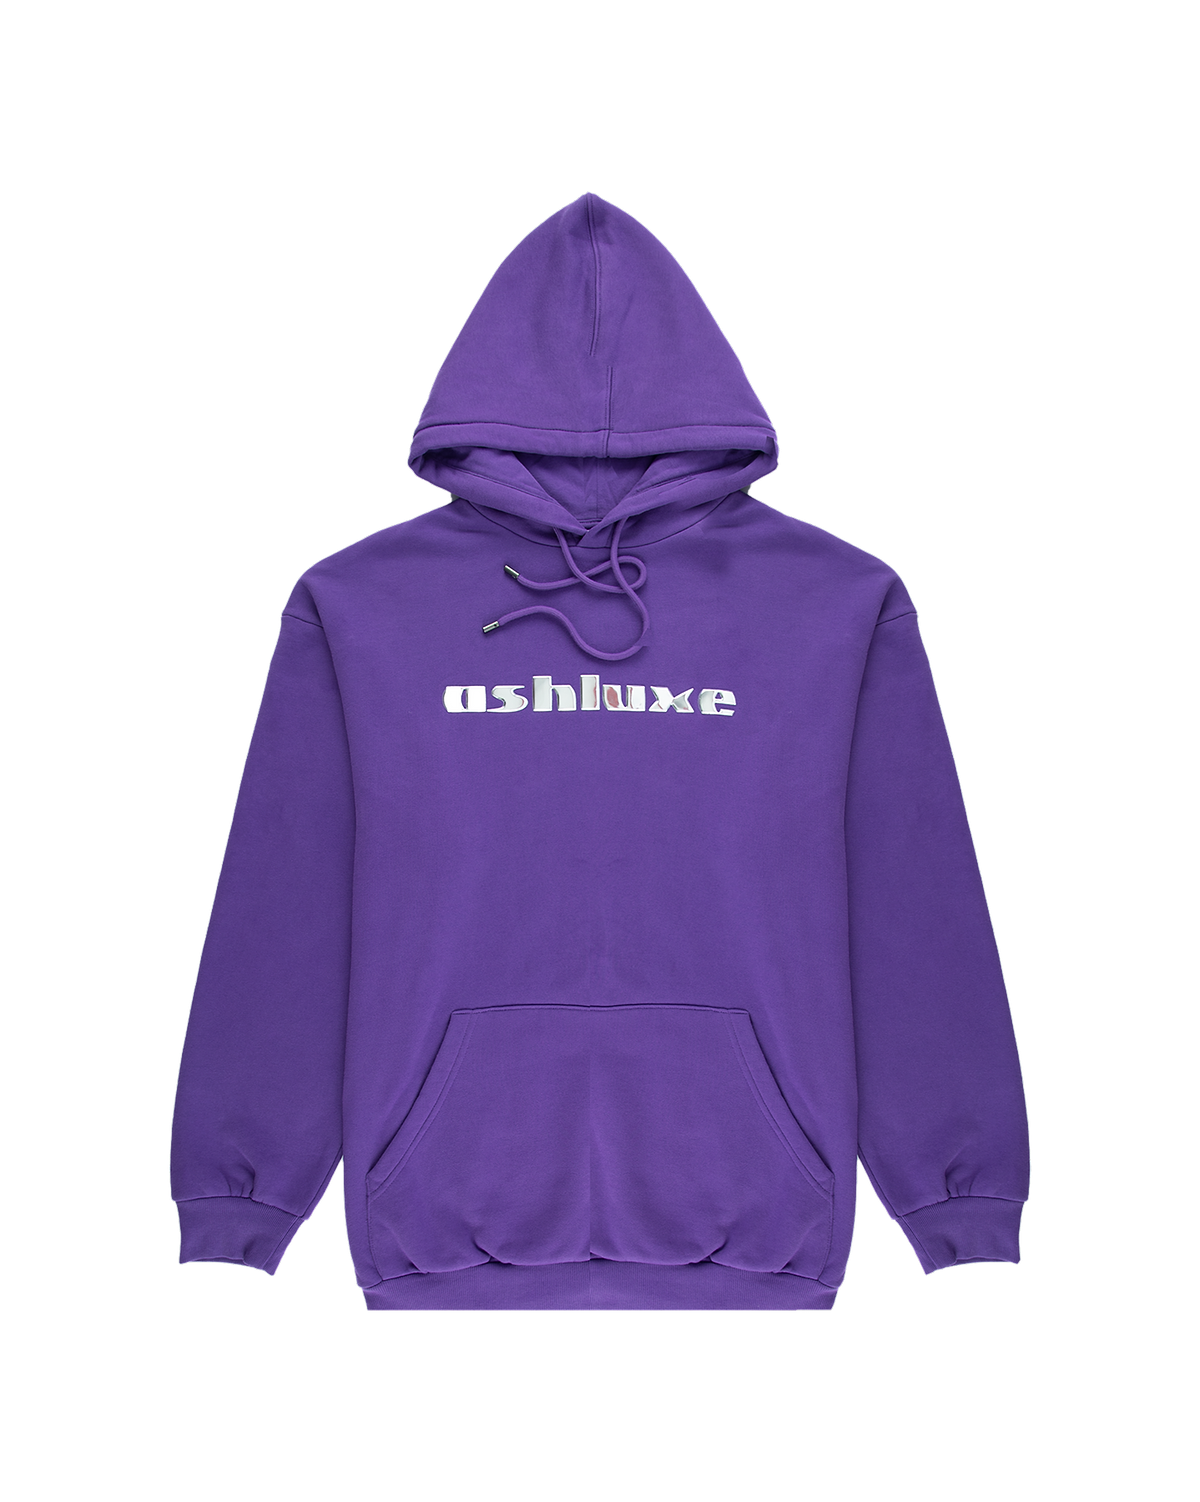 Ashluxe Chrome Hoodie Purple